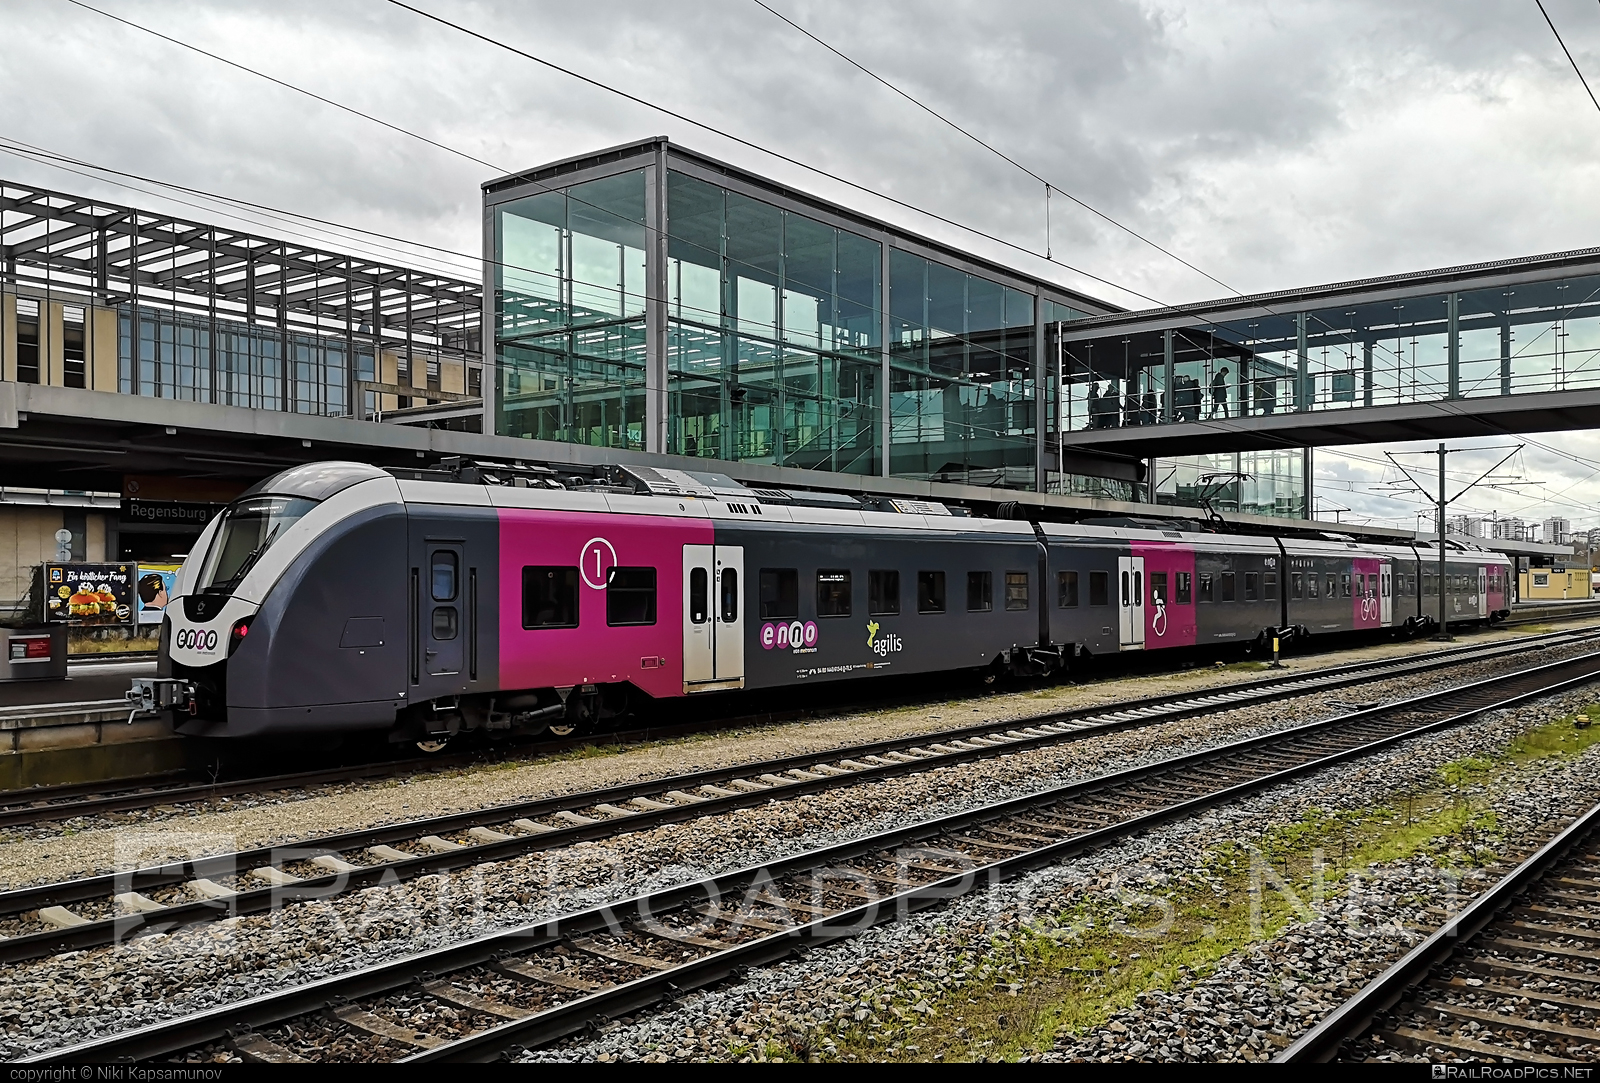 Alstom Coradia Continental - 1440 613-6 operated by metronom Eisenbahngesellschaft mbH #agilis #alstom #alstomcoradia #alstomcoradiacontinental #enno #tls